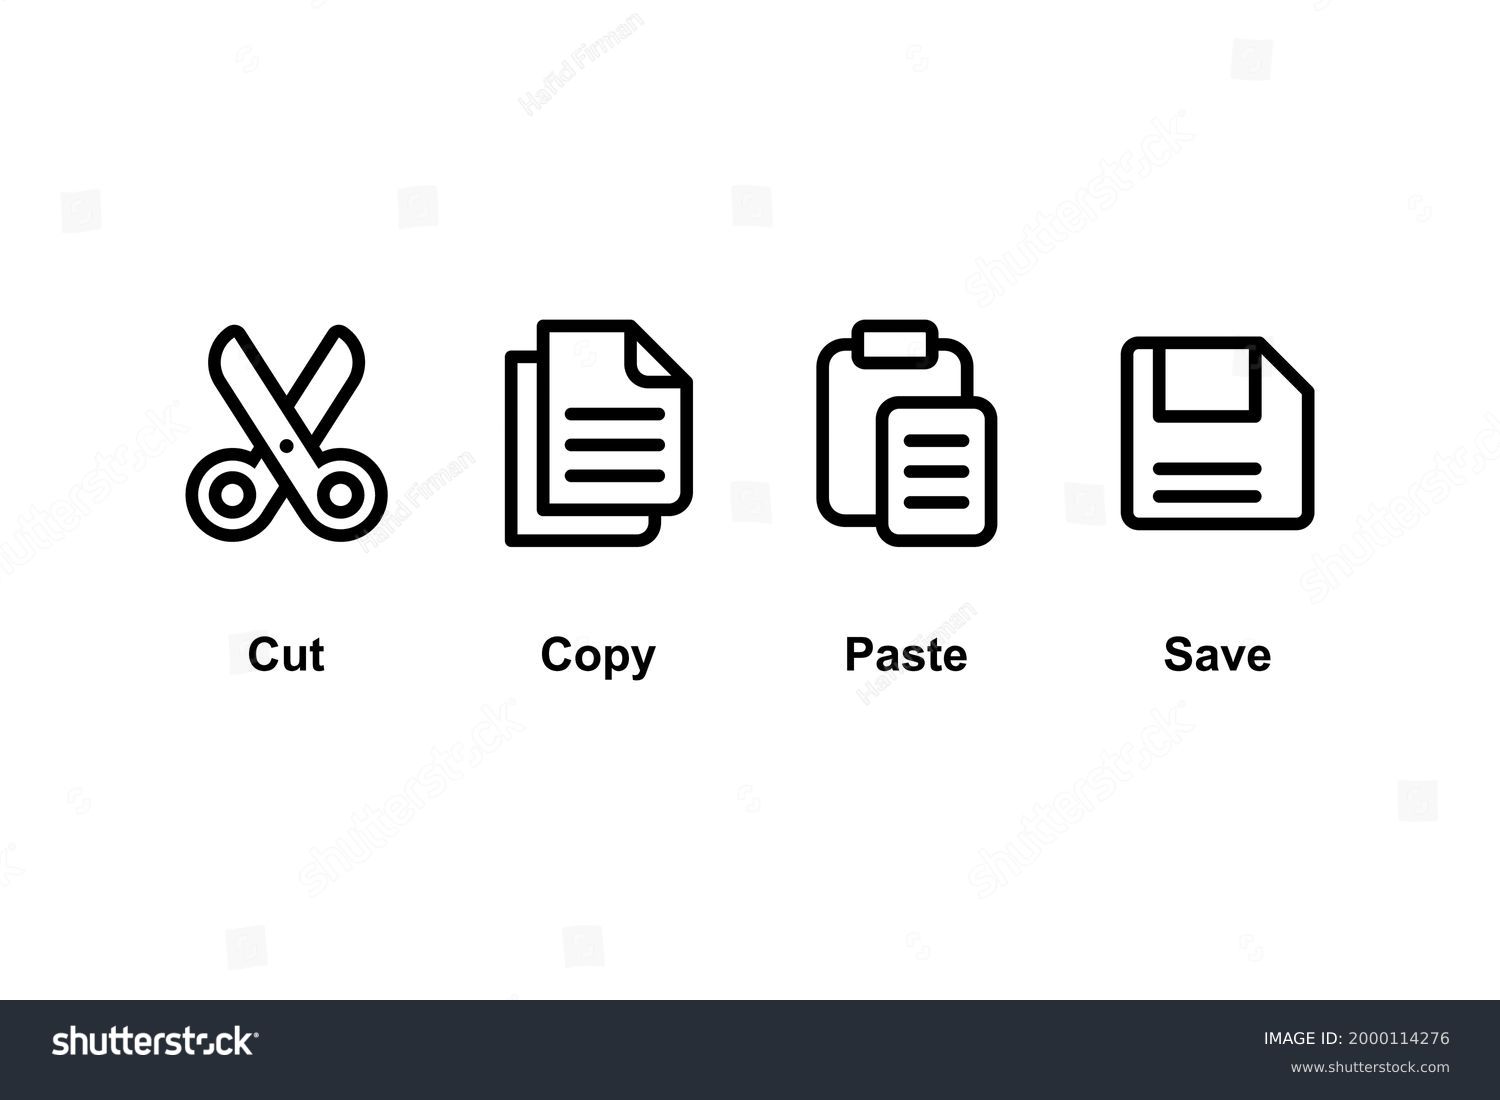 9,004 張 Copy paste icon 圖片、庫存照片和向量圖 Shutterstock